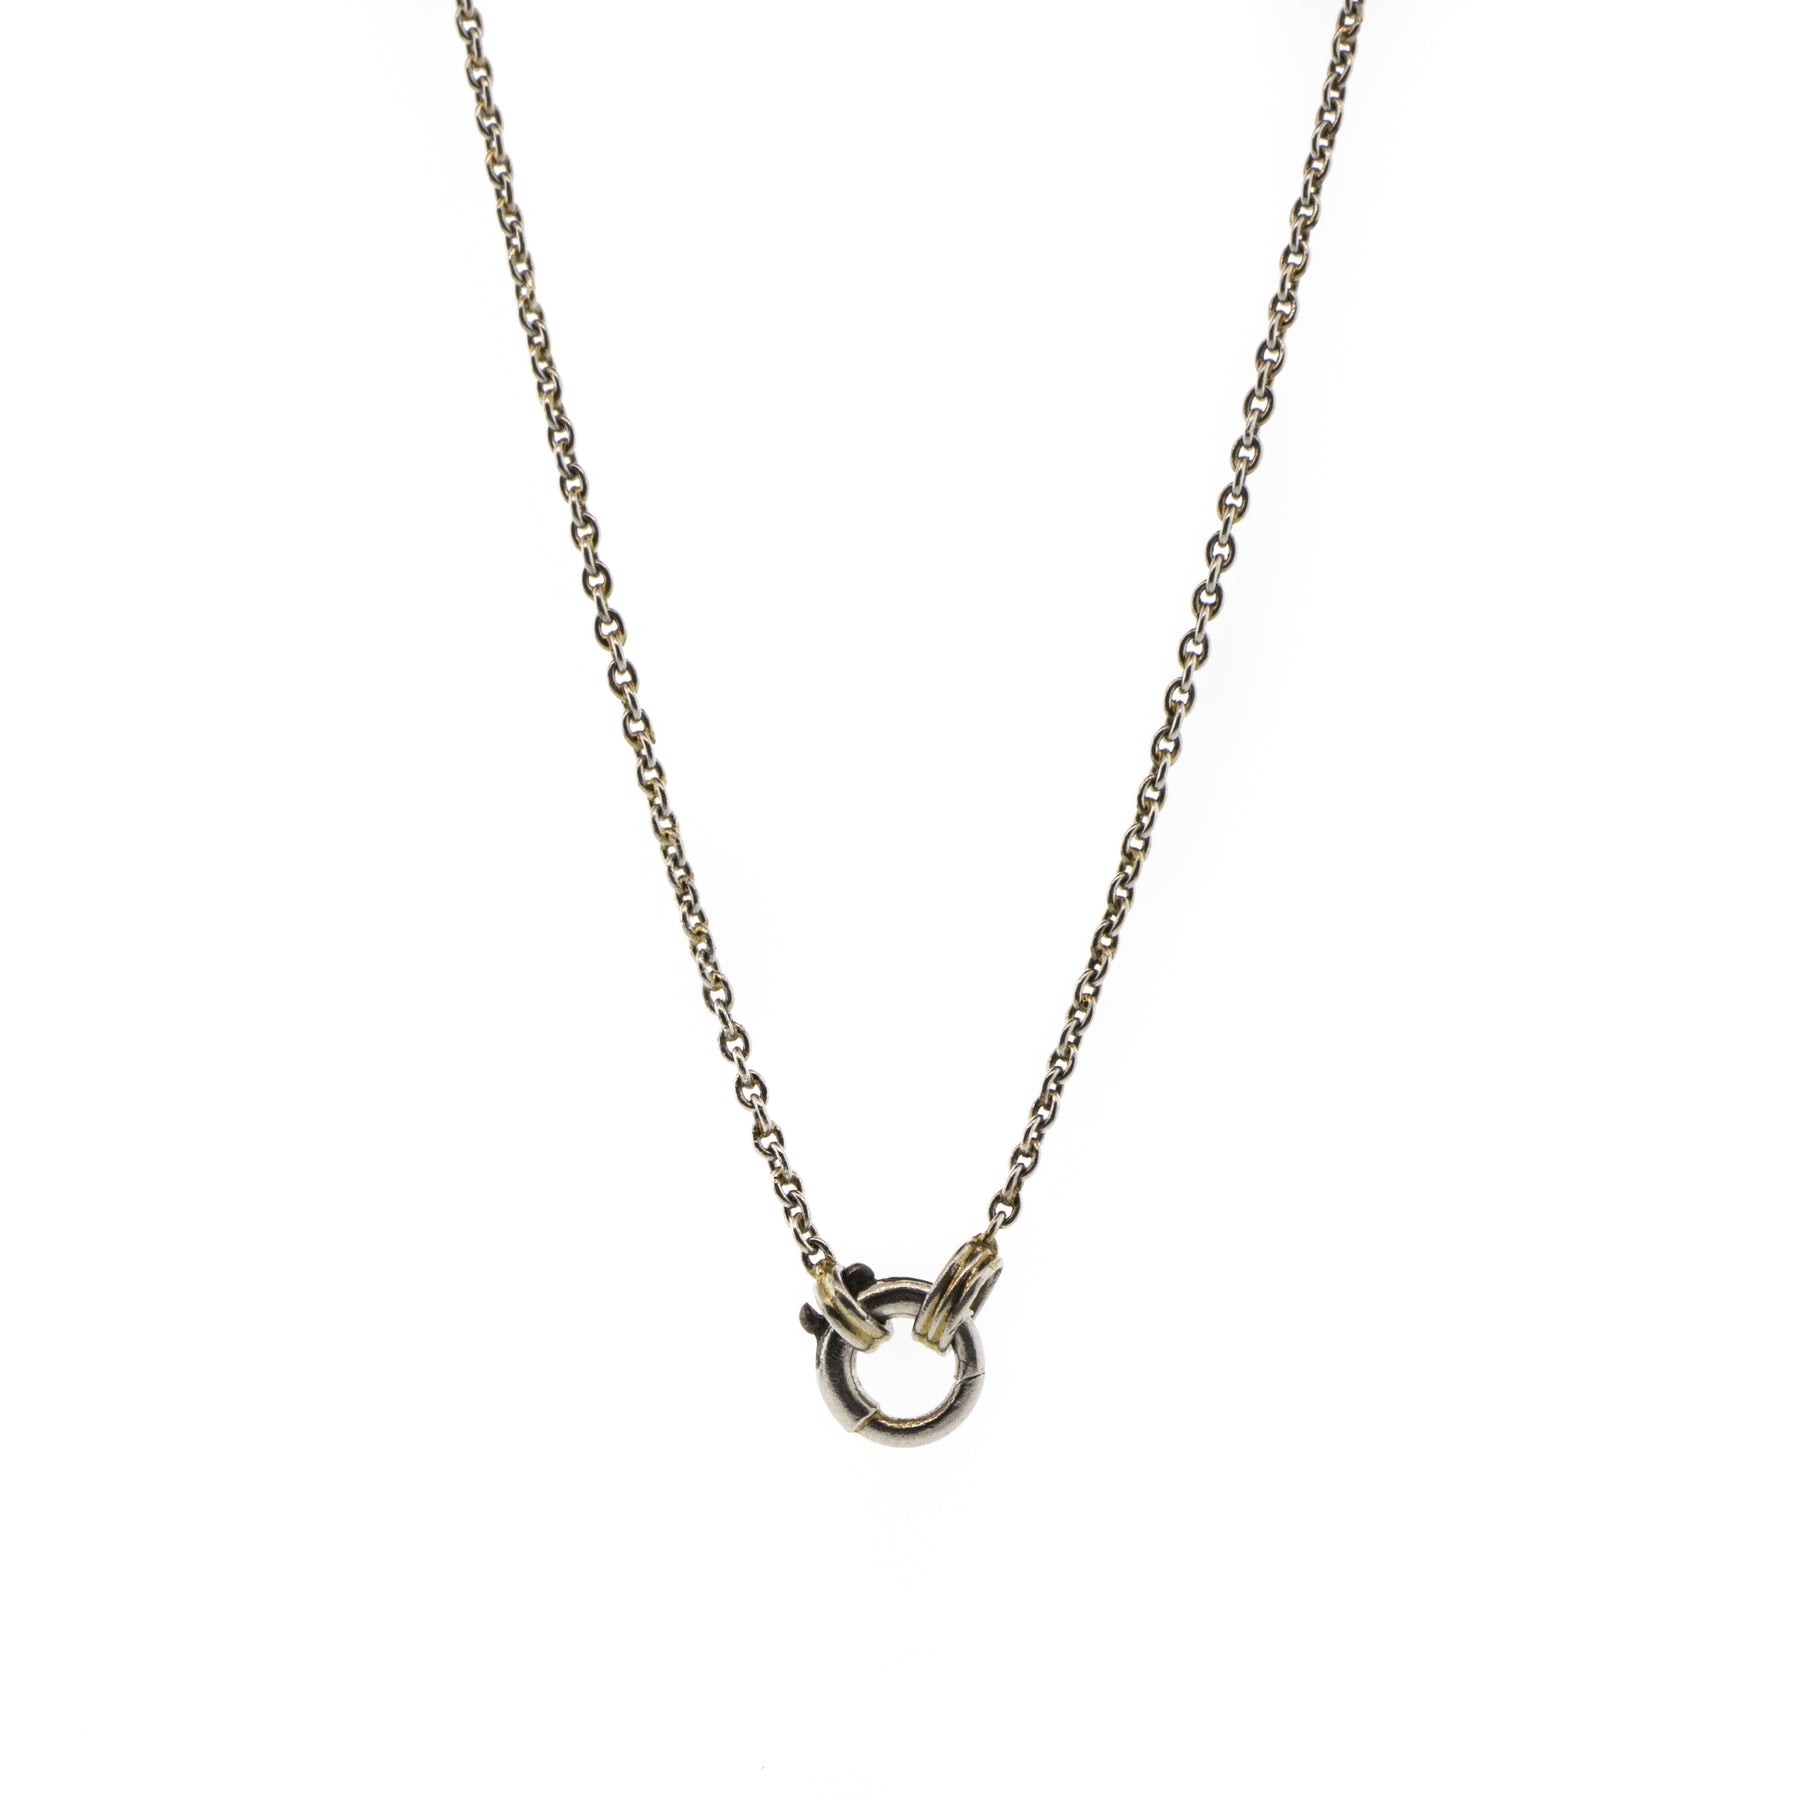 Edwardian Sapphire and Diamond Platinum Necklace